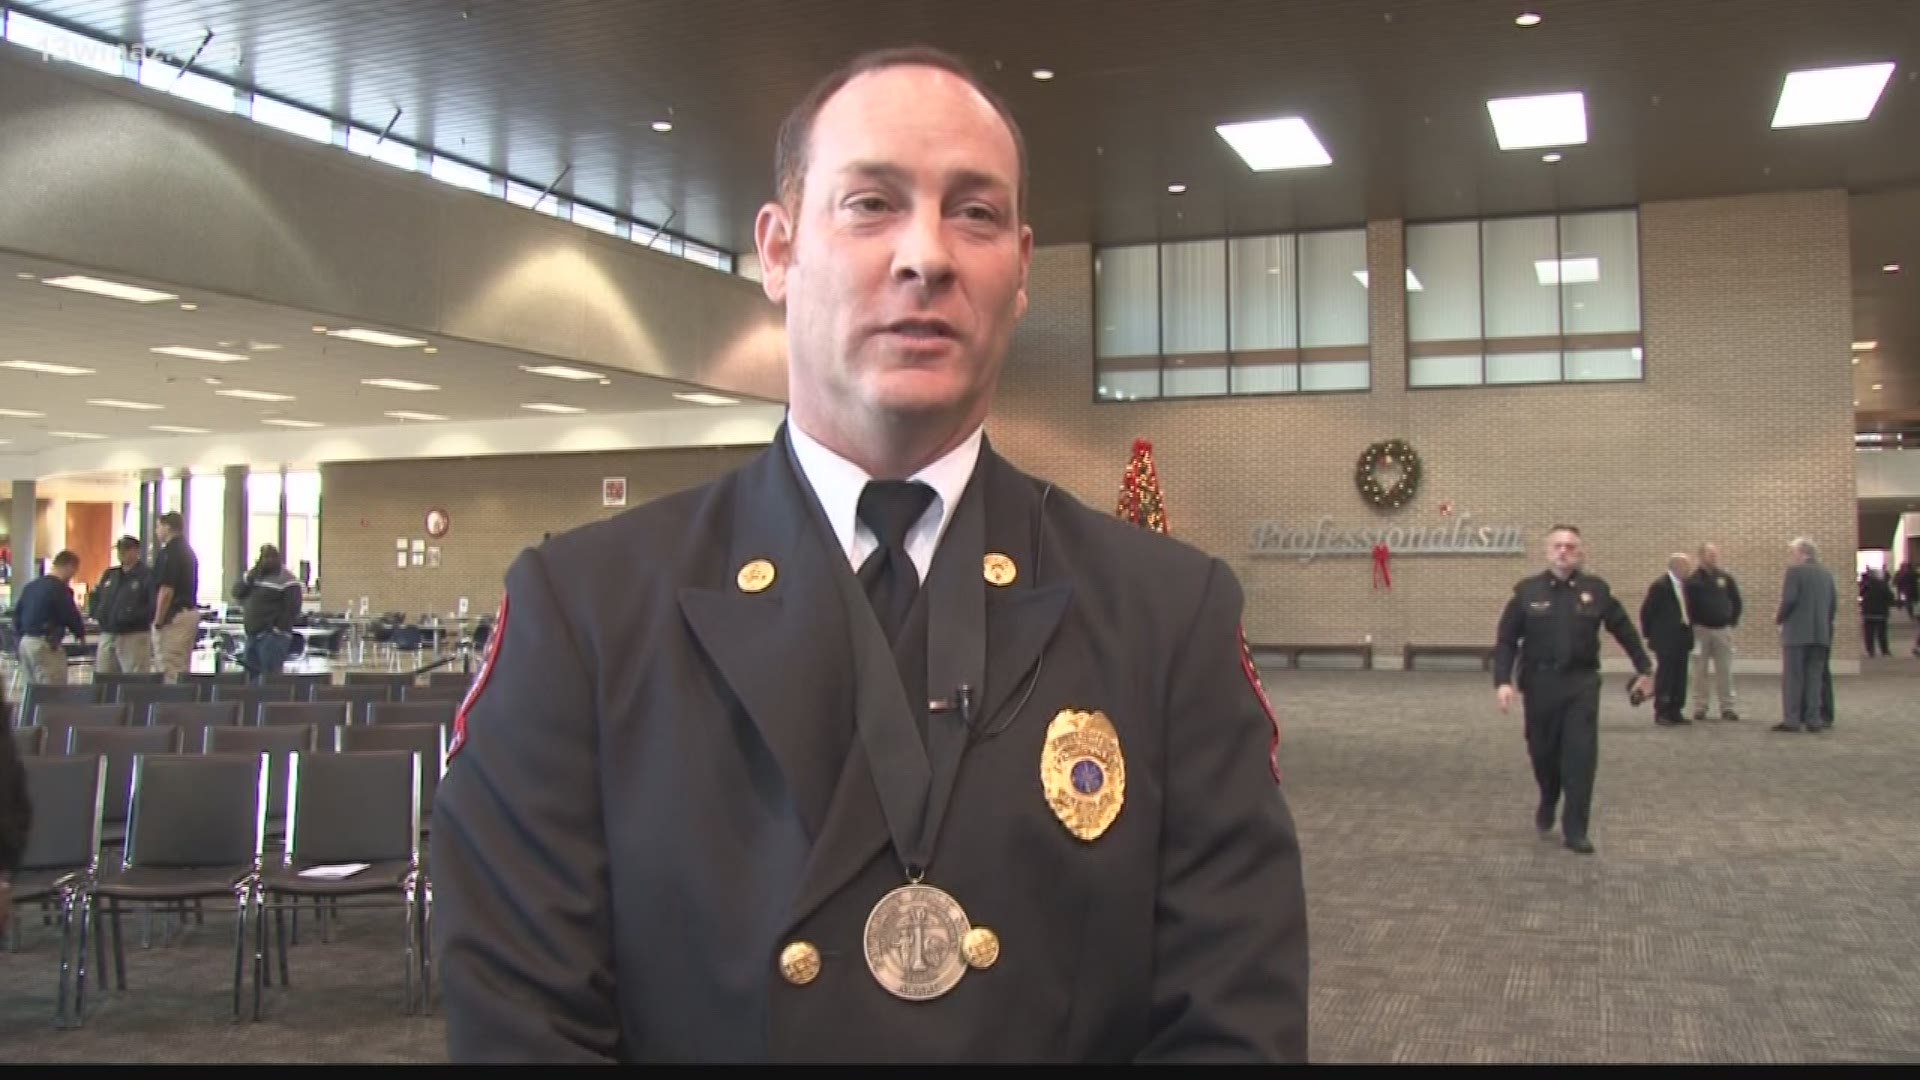 High Falls rescuer receives heroism award